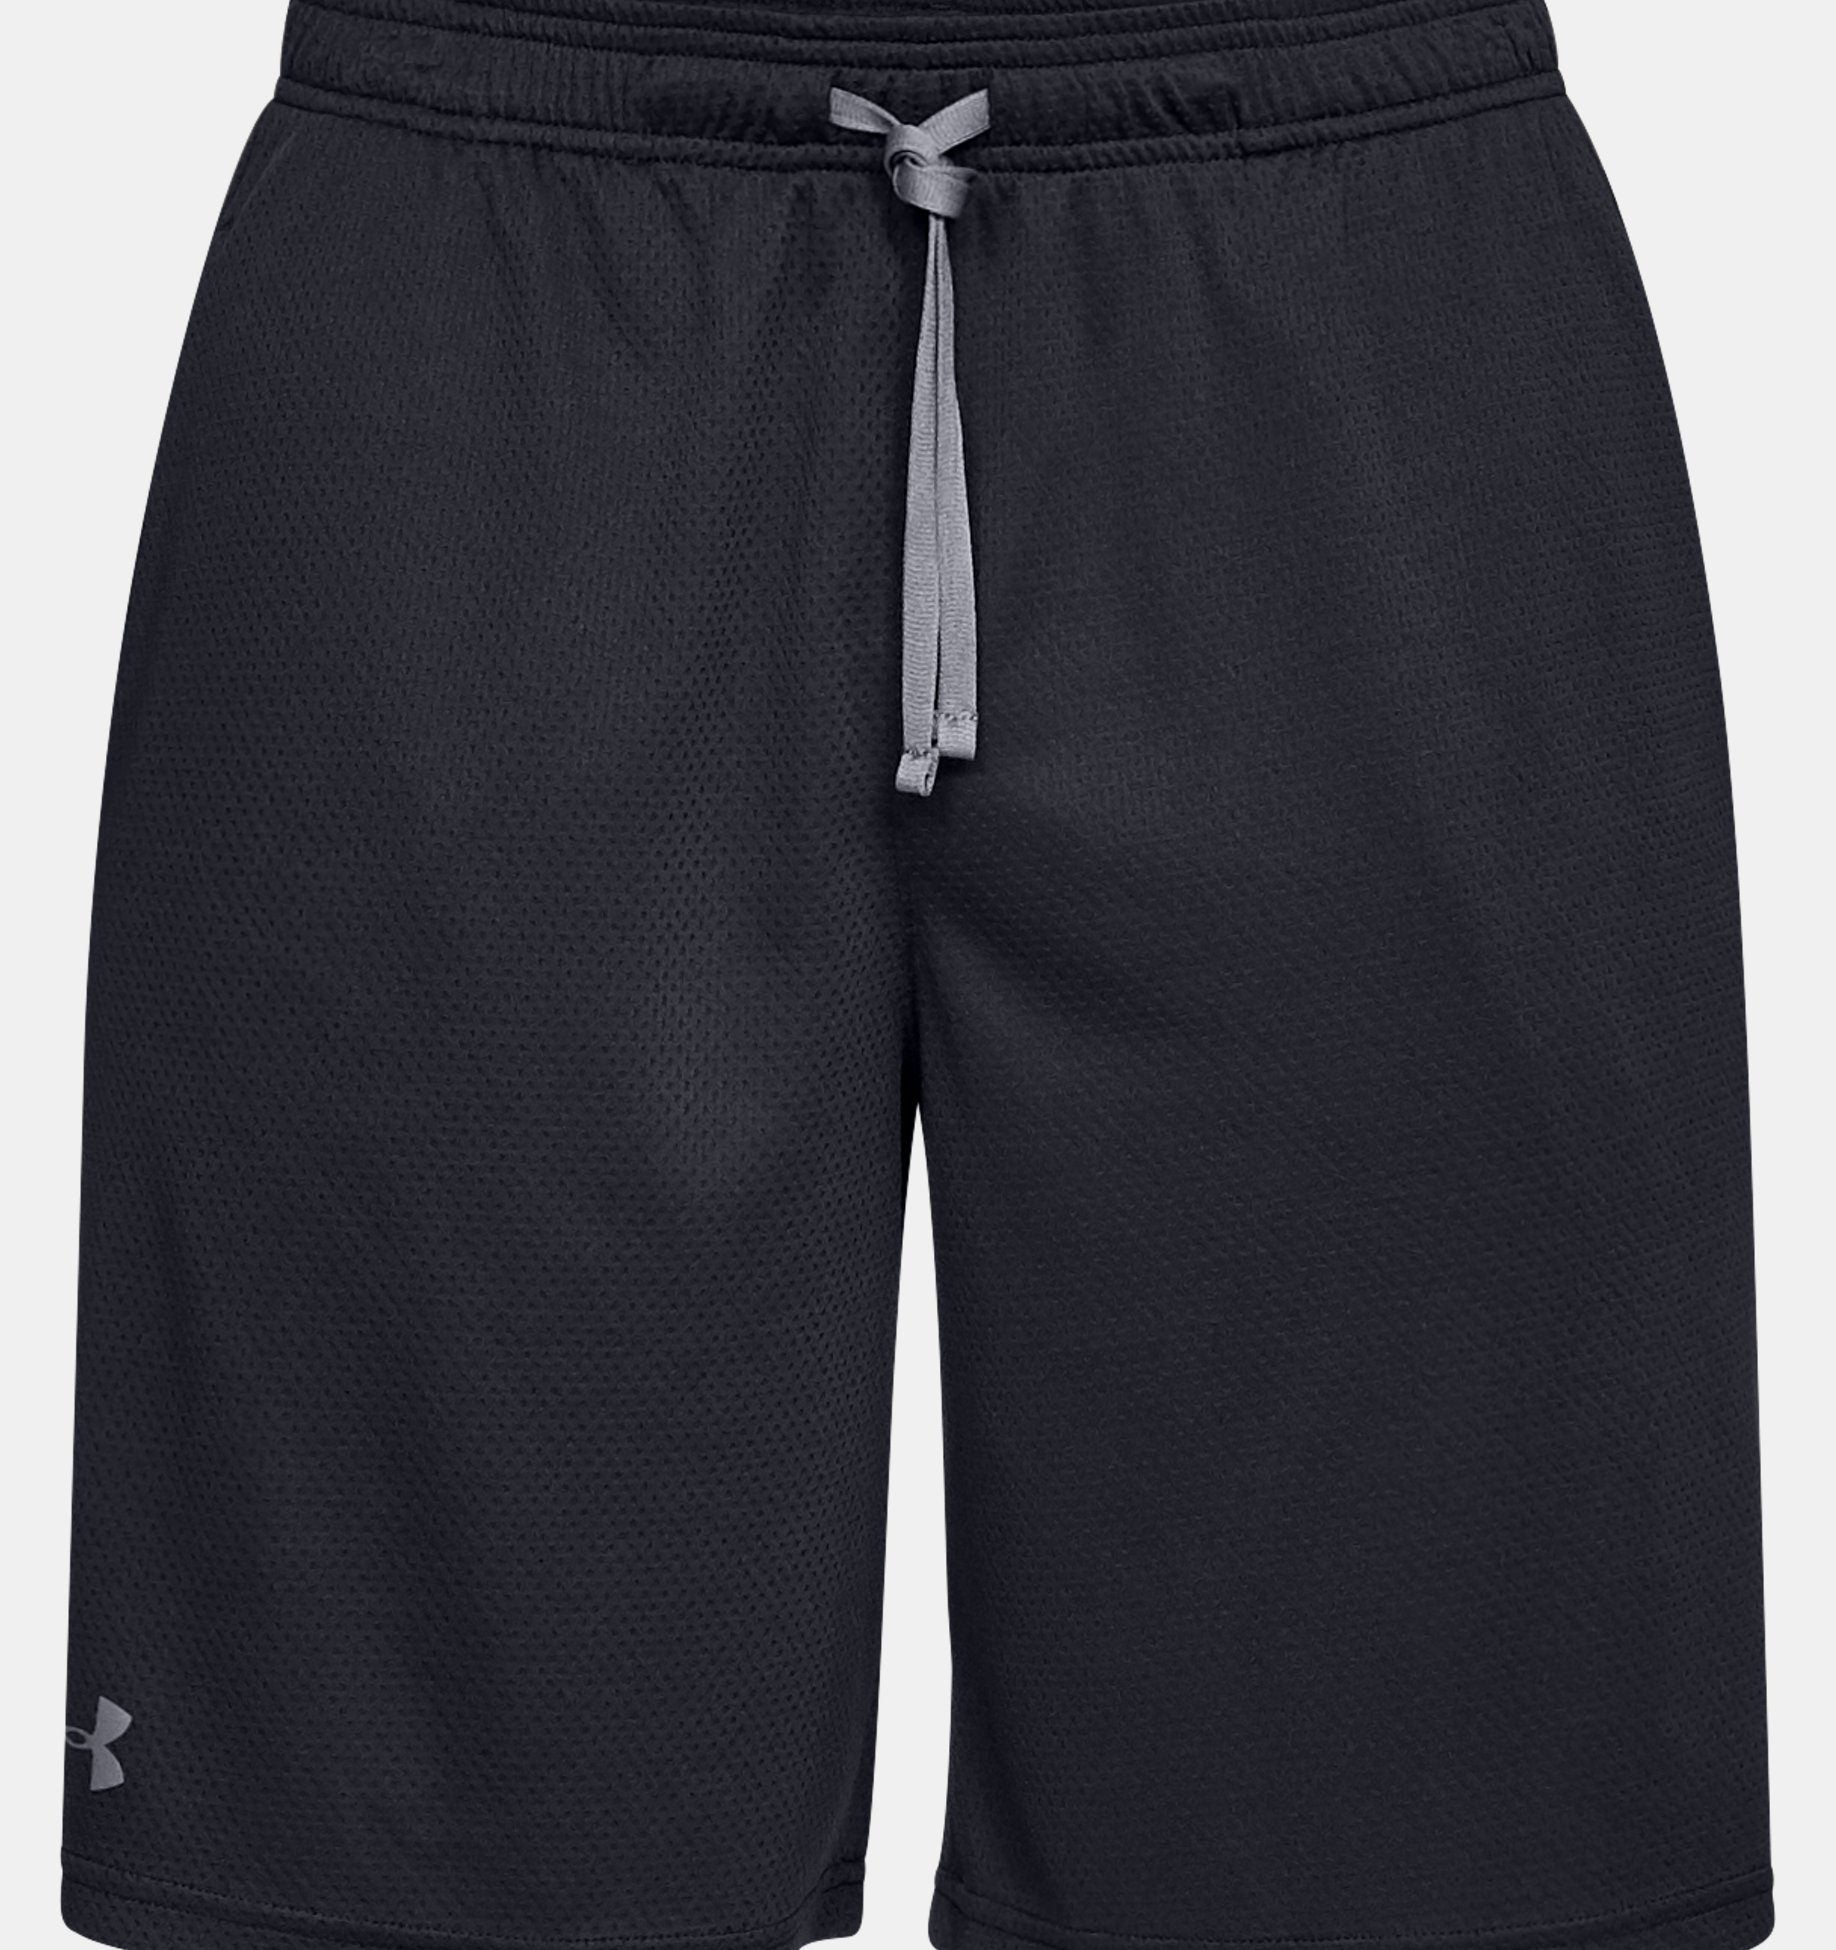 Under Armour Men's UA Tech™ Mesh Shorts 1328705 - Black, 3XL